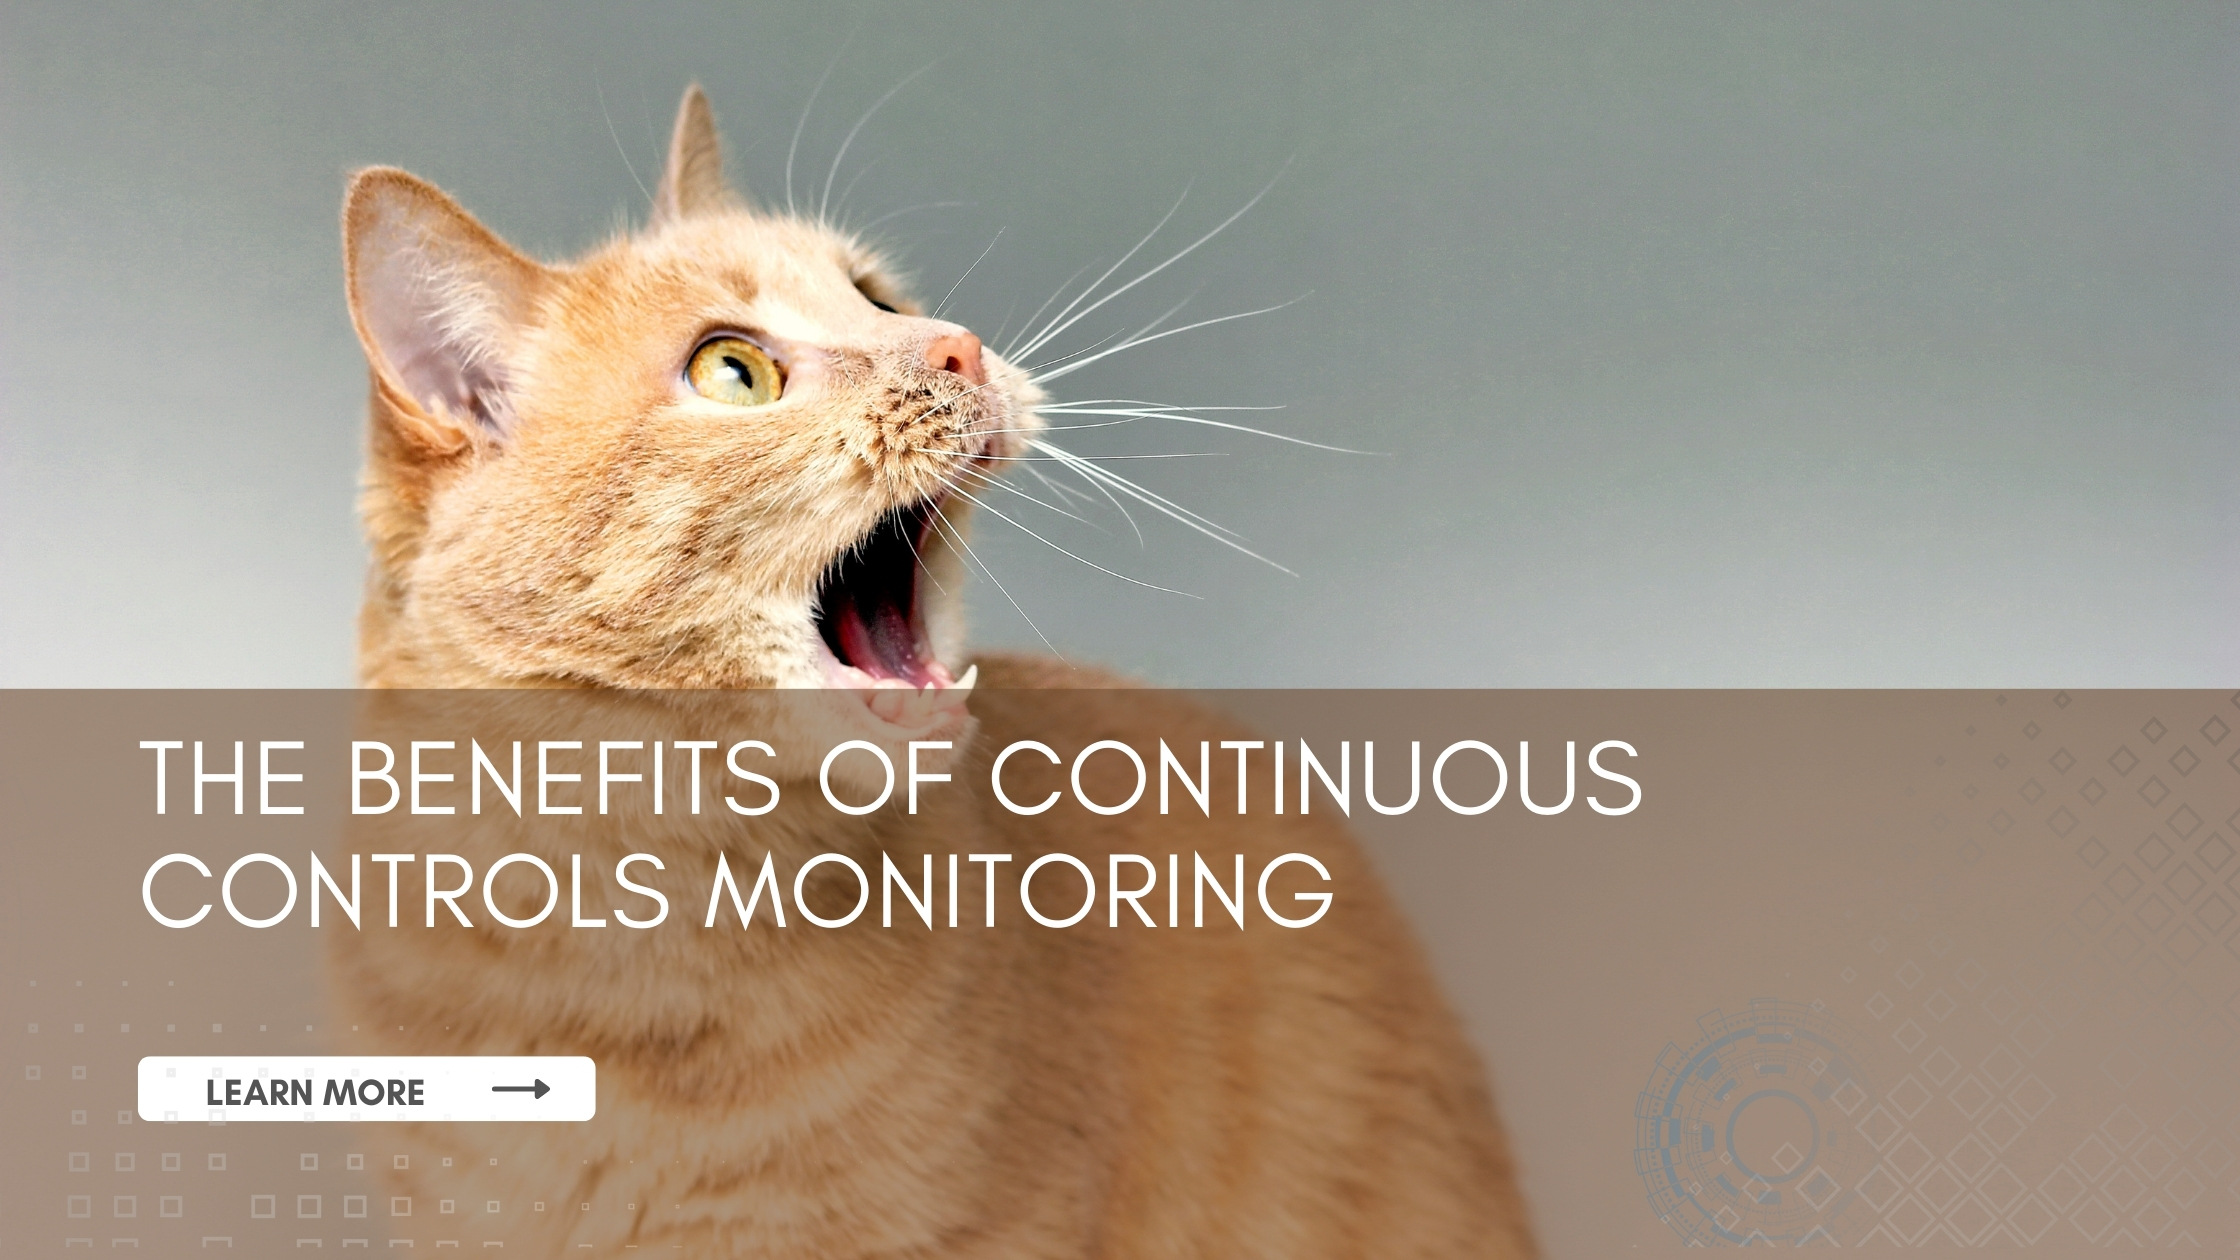 Continuous Controls Monitoring